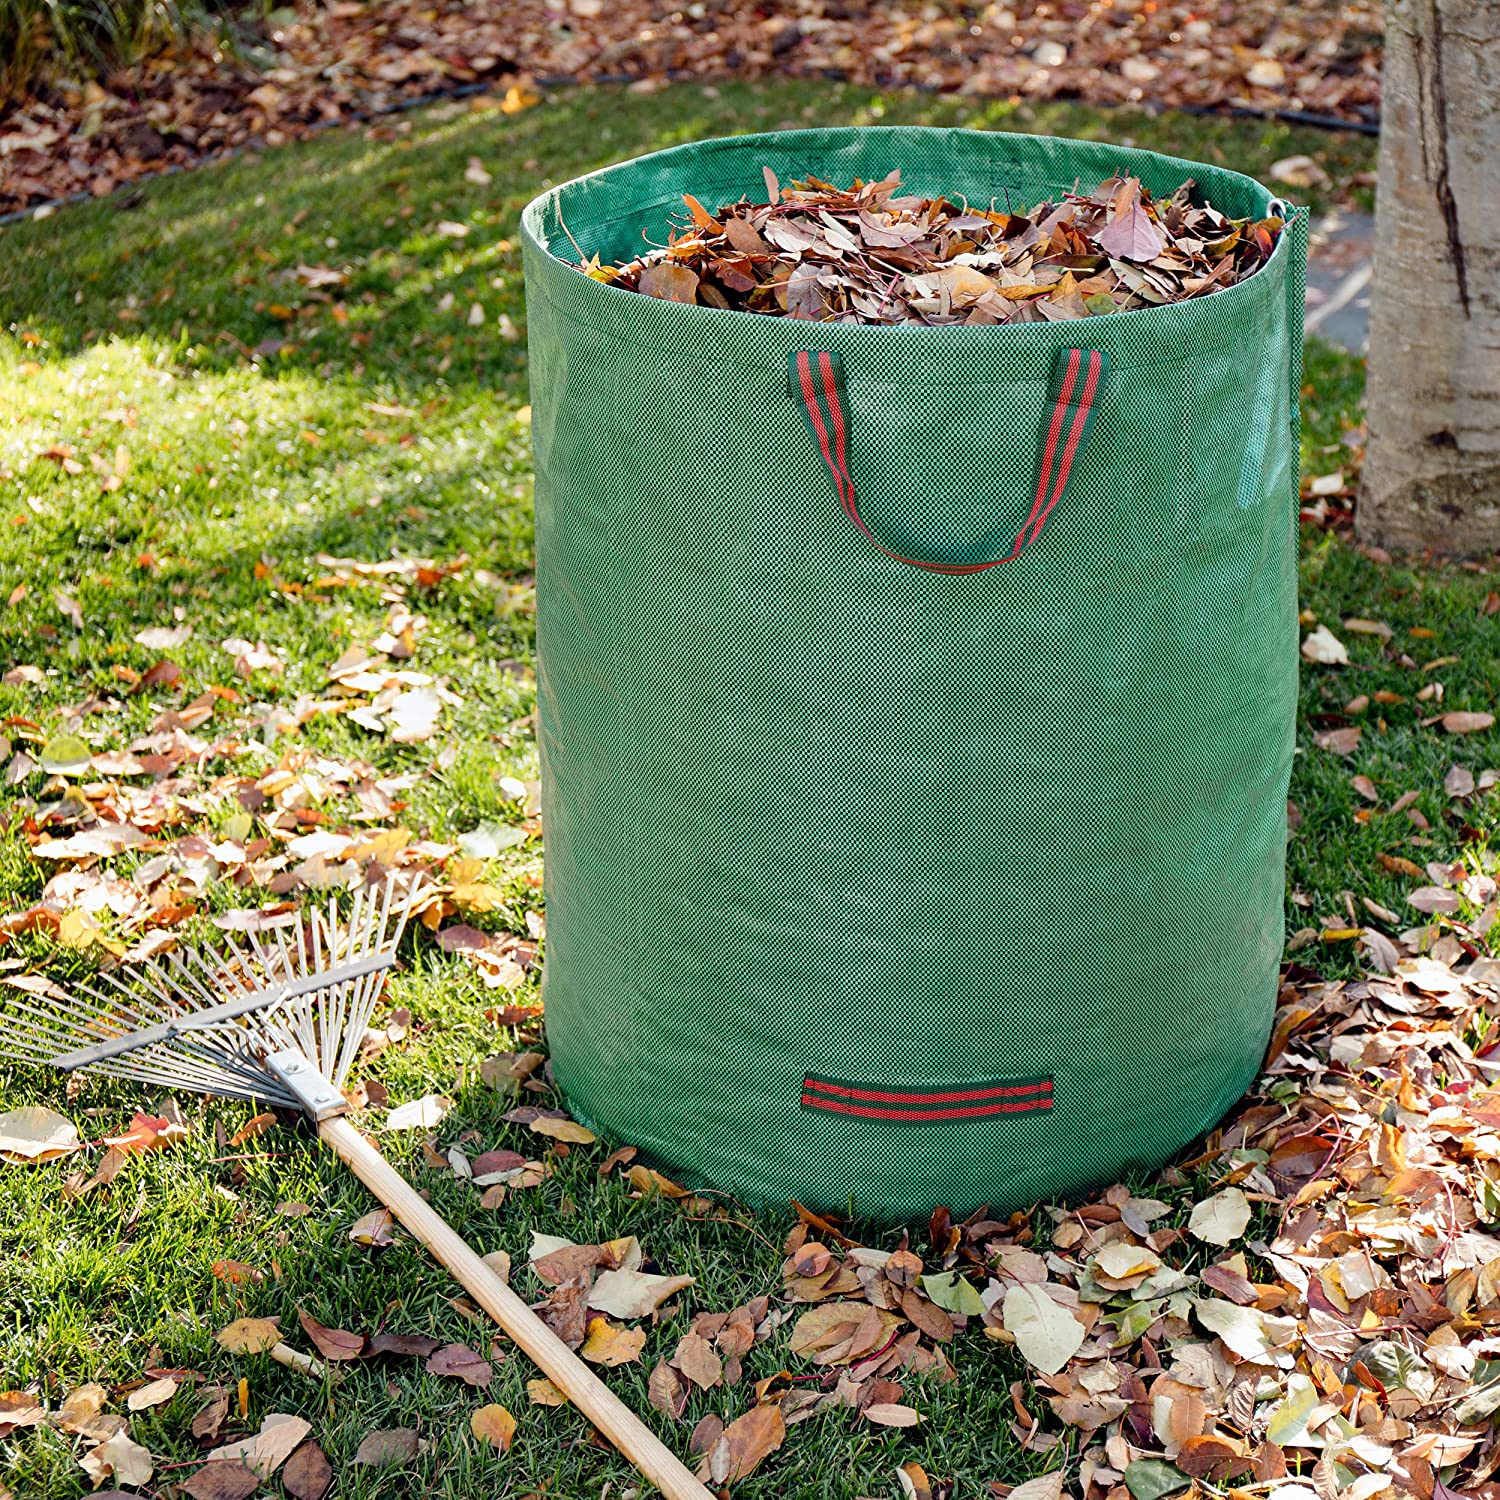 3Pack Reusable Garden Waste Bags 72 Gallon Yard Leaf Lawn Trash